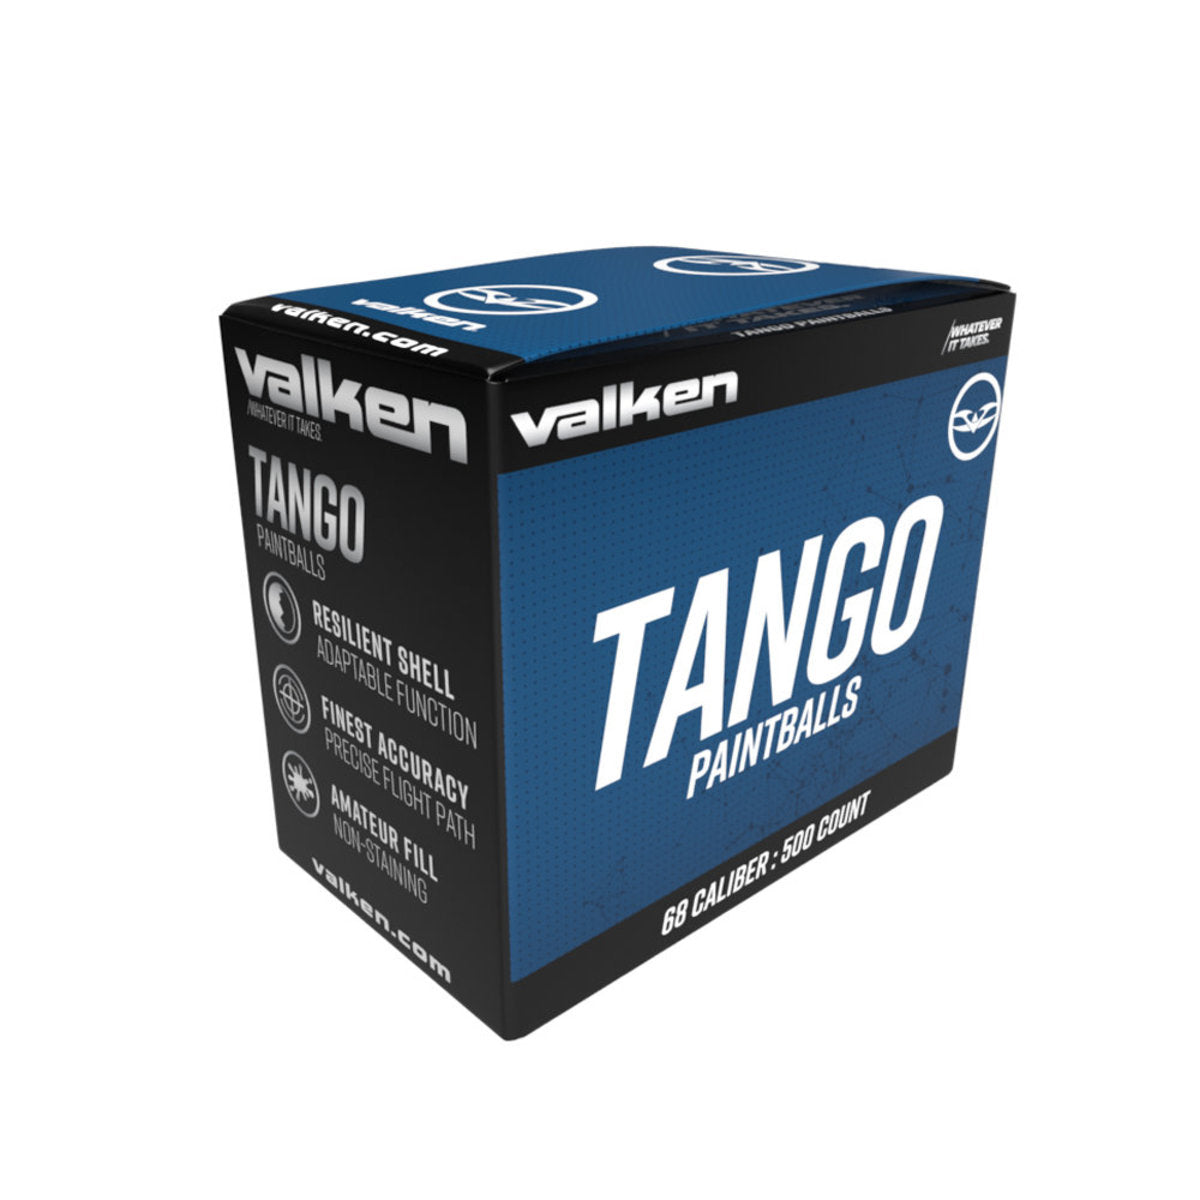 Valken Tango .68 Caliber Paintballs - 500 Count